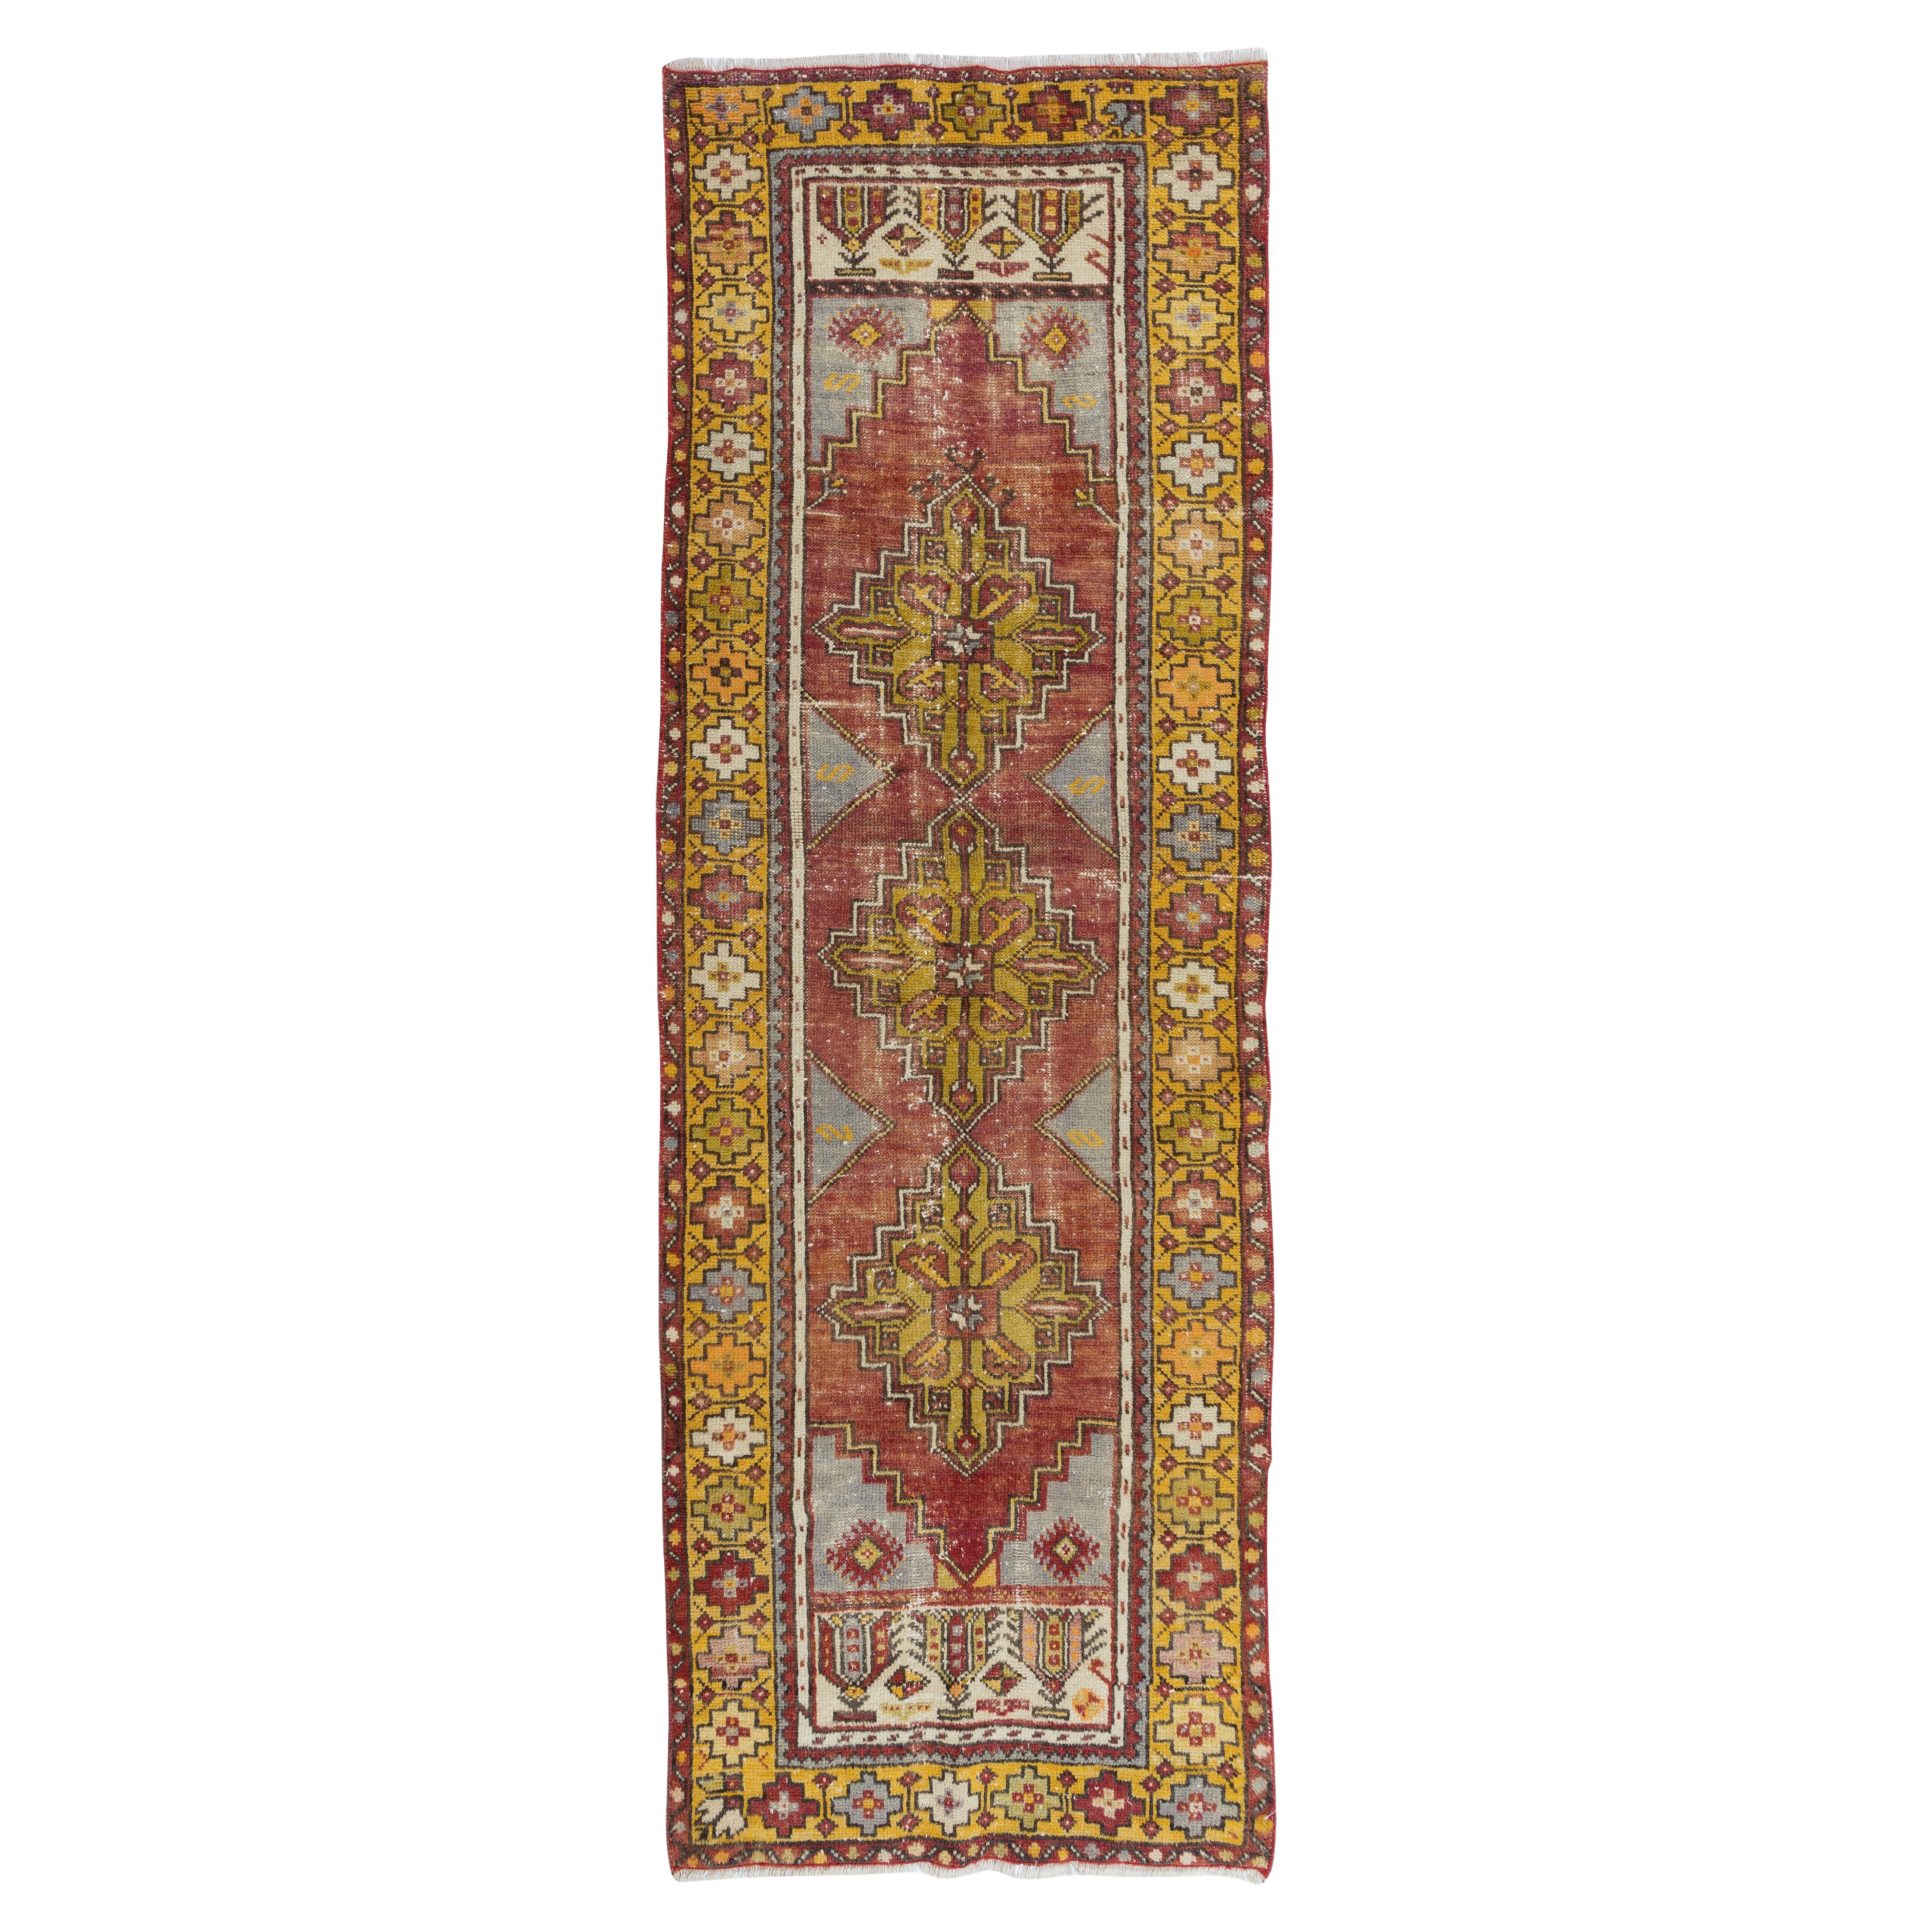 3x8.7 Ft Vintage Village Runner Rug from Turkey, Hand-Knotted Corridor Carpet